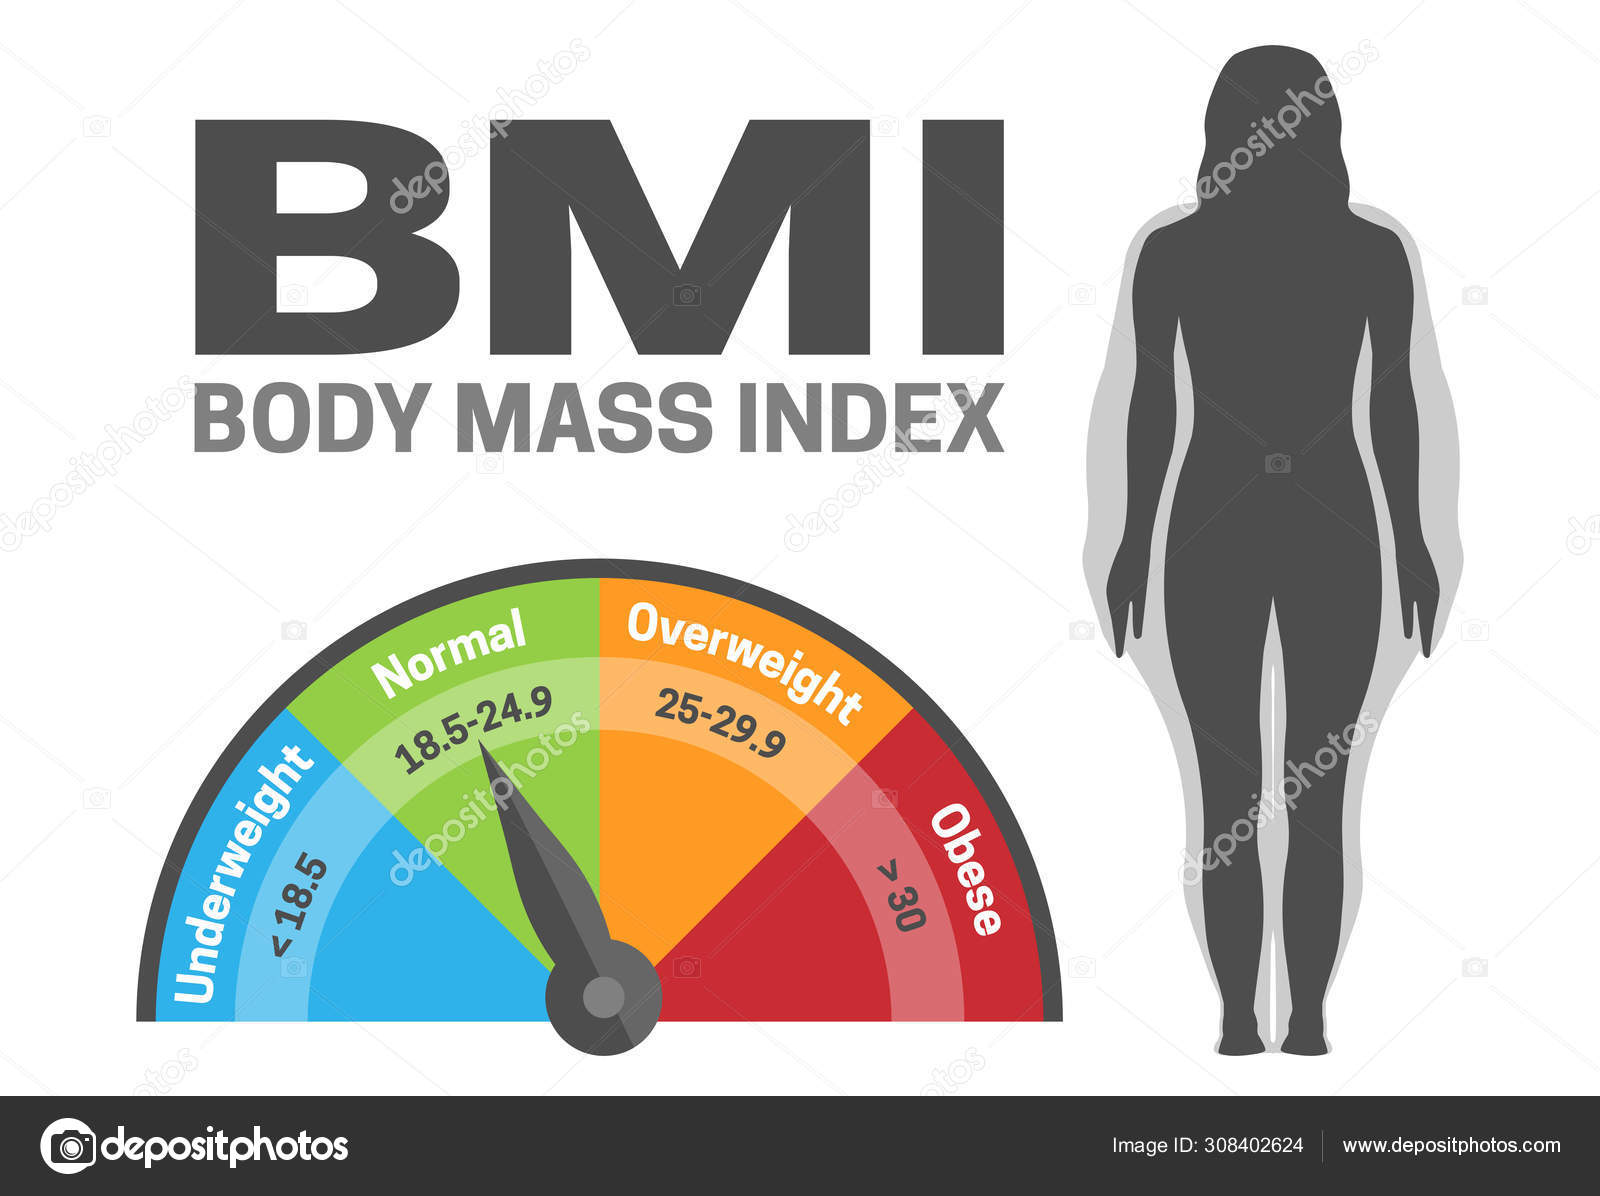 https://st4.depositphotos.com/18753310/30840/v/1600/depositphotos_308402624-stock-illustration-bmi-body-mass-index-infographic.jpg